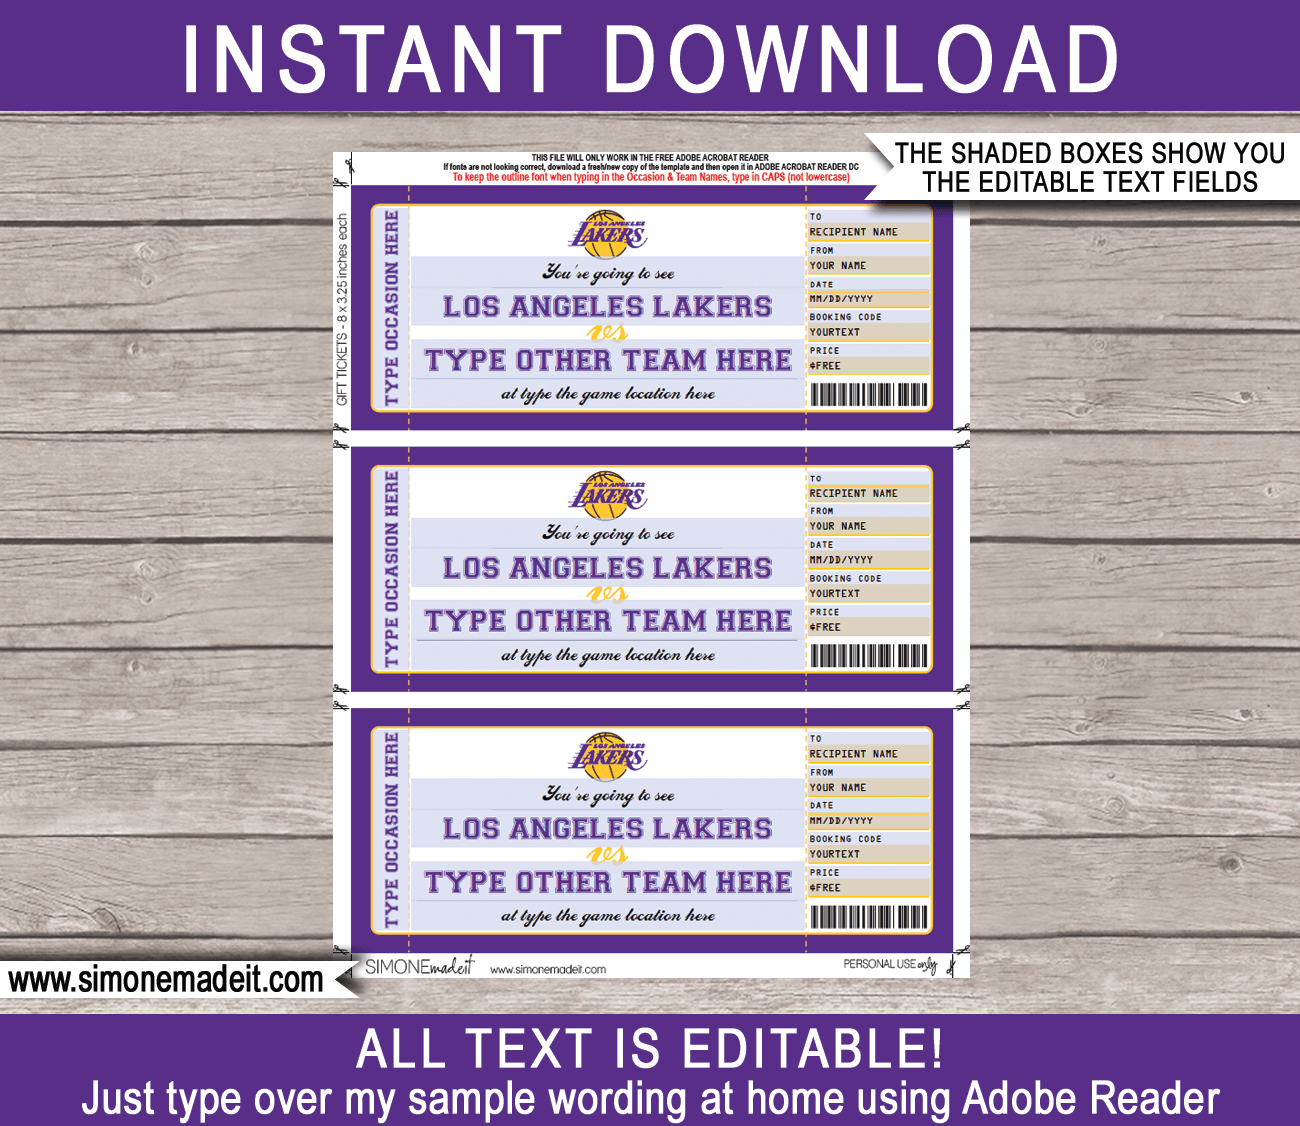 Los Angeles Lakers NBA Store eGift Card ($10-$500)